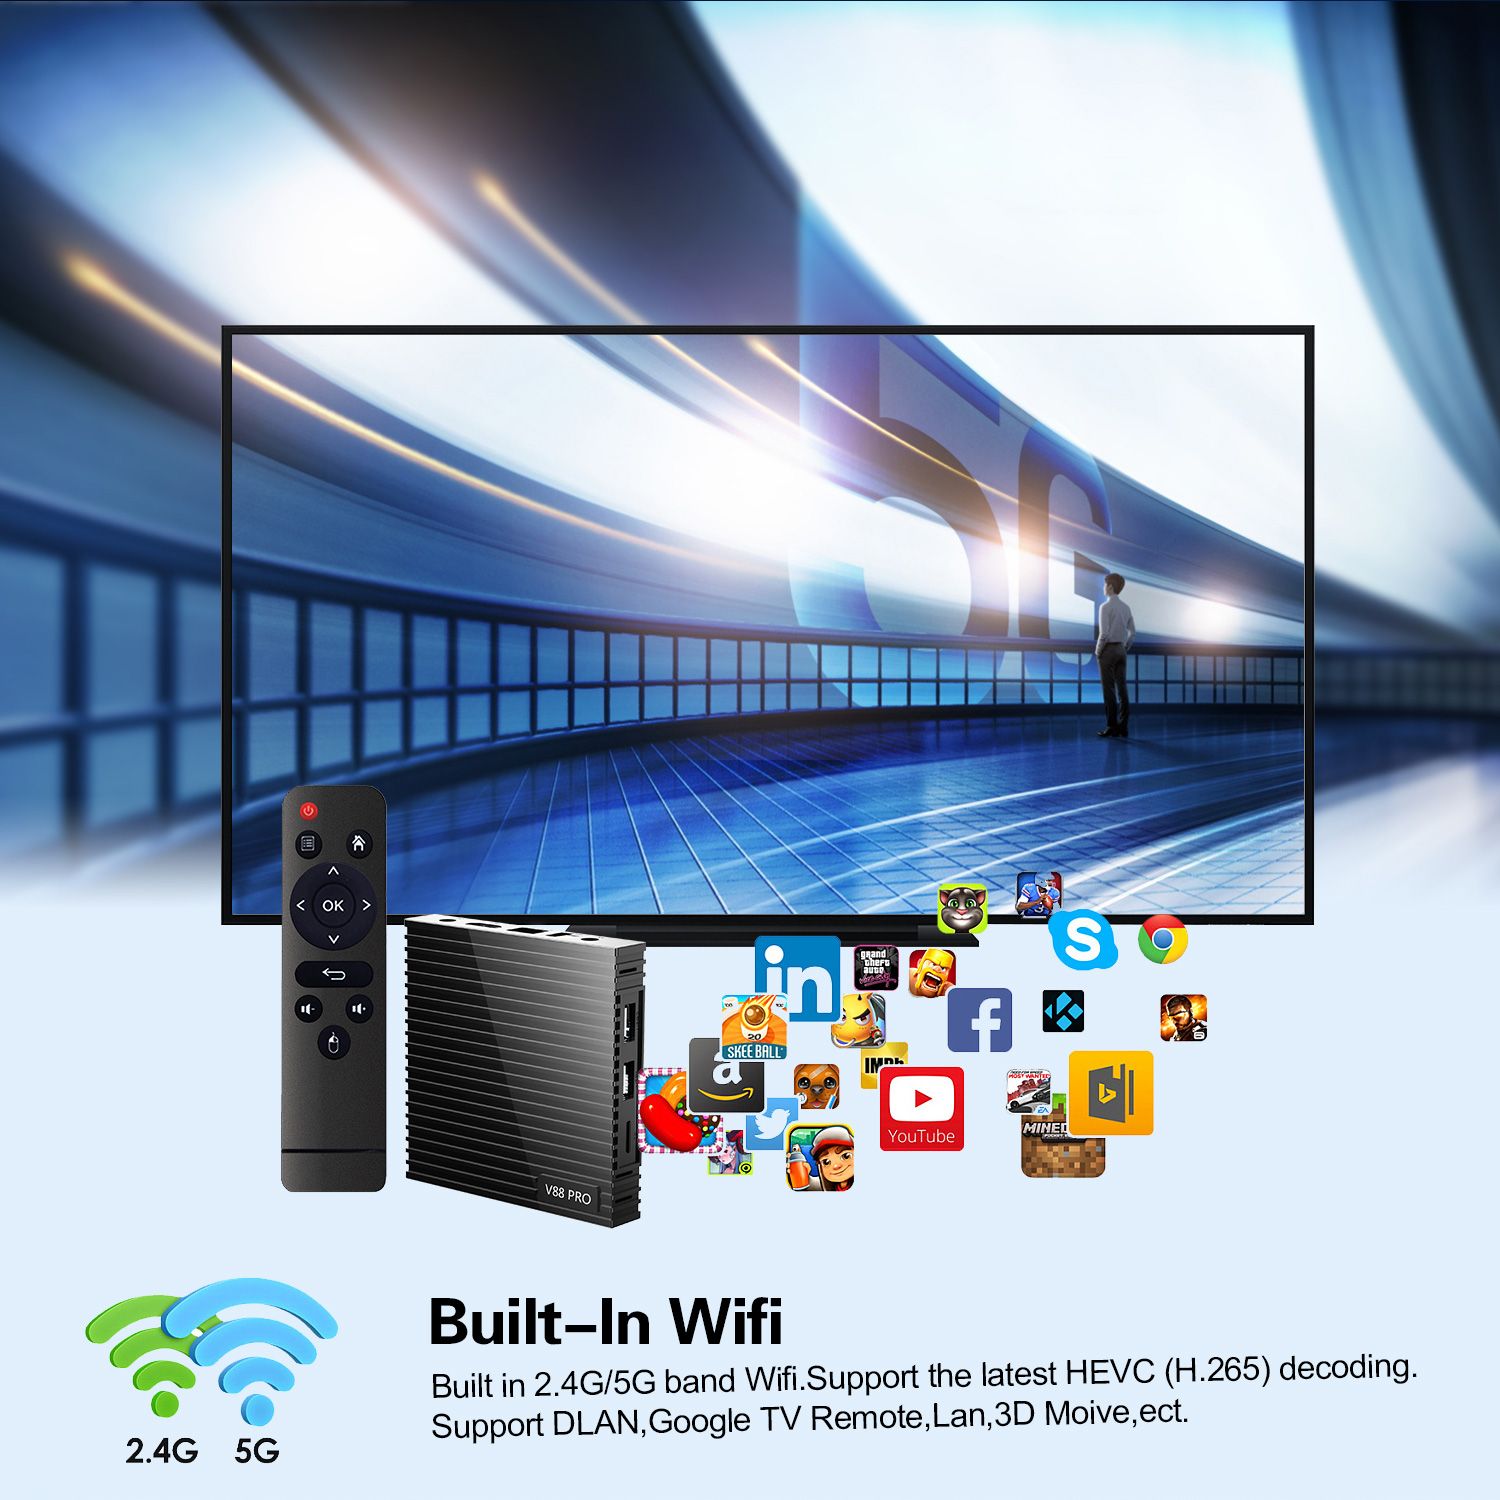 V88-PRO-Rockchip-3228A-DDRIII-2GB-EMMC-16GB-5G-WIFI-Android-90-2K-VP9-H265-Smart-Internet-TV-Box-Mul-1711689